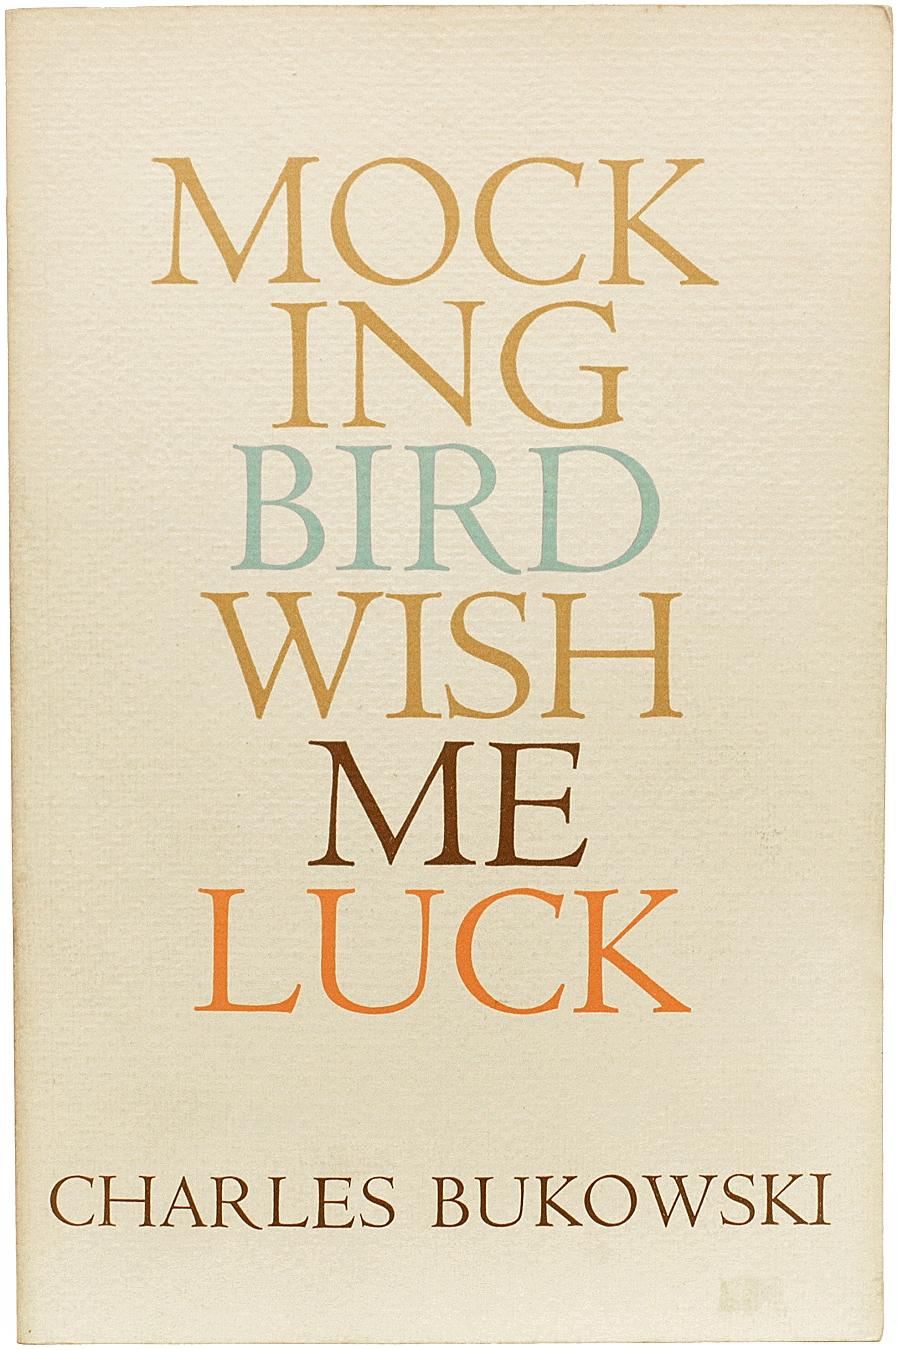 Author: bukowski, charles.
Title: mockingbird wish me luck.
Publisher: los angeles: black sparrow press, 1972.
Description: presentation copy first paperback edition. 1 vol., 9-1/2